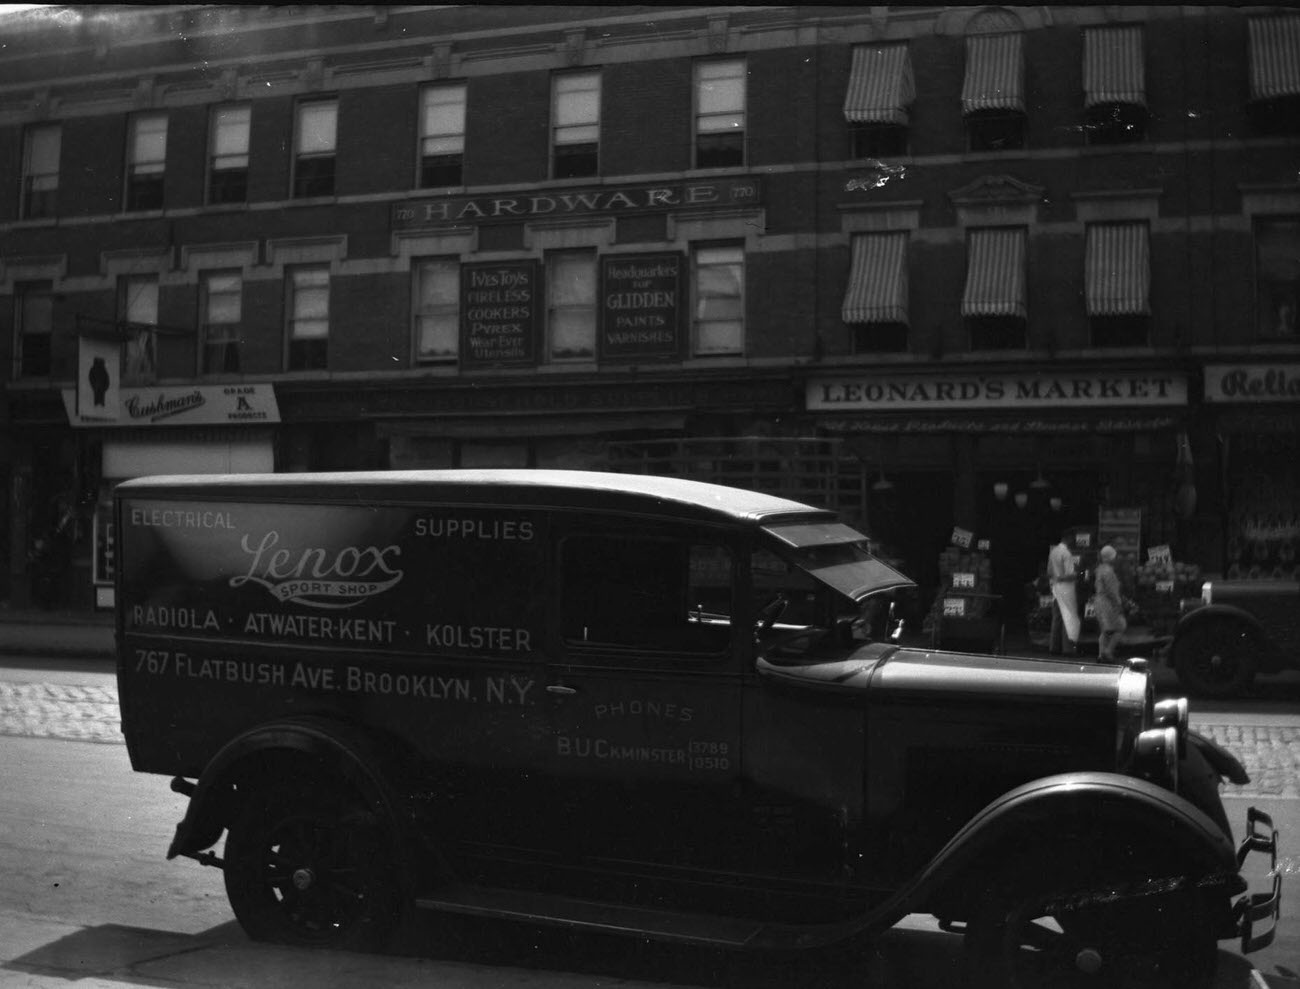 Delivery Truck From Lenox Sport Shop, 767 Flatbush Avenue, 1910S